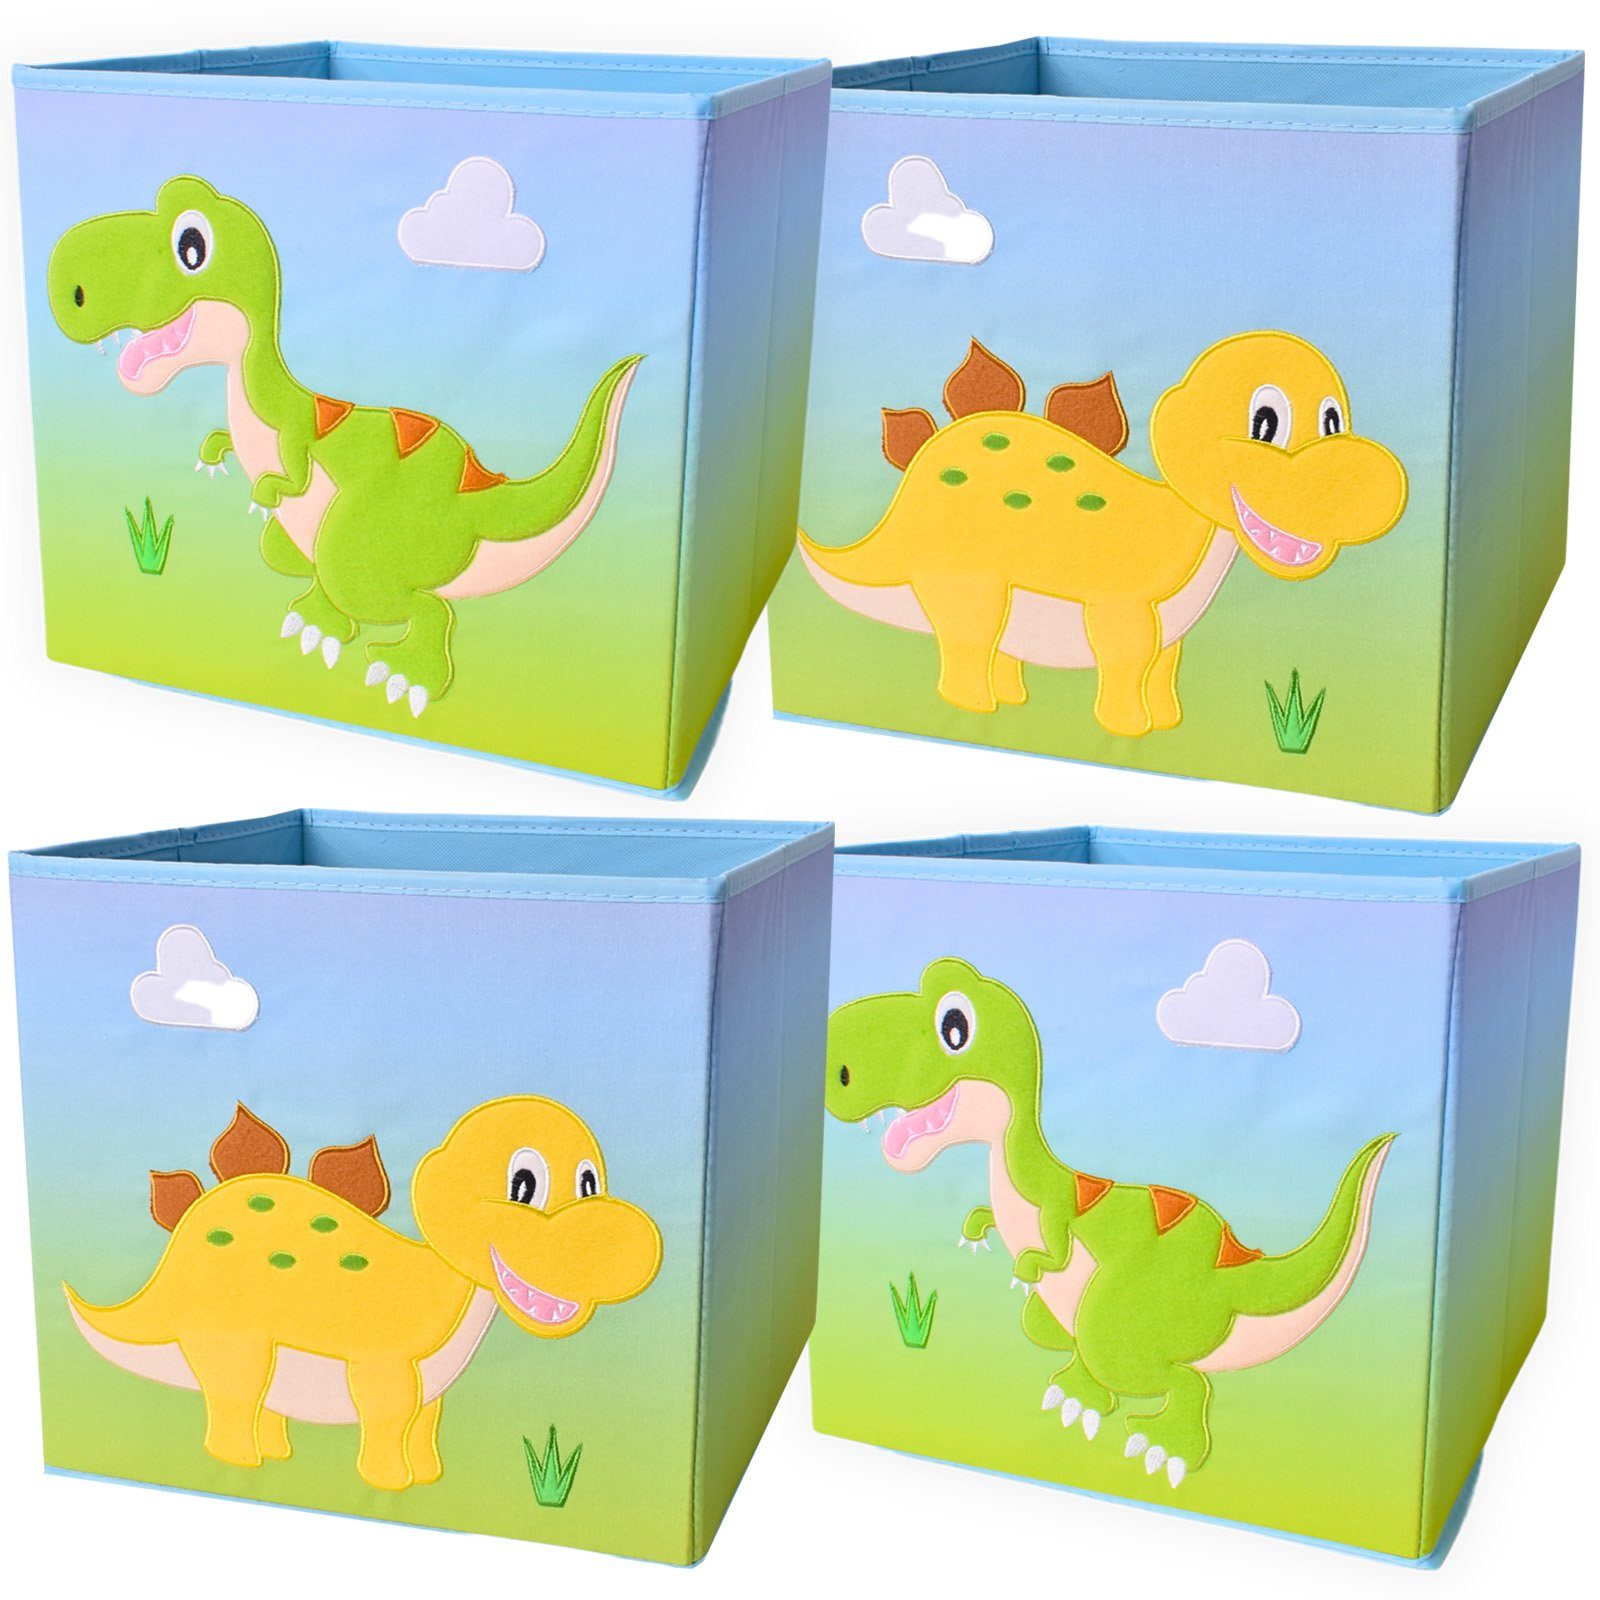 TE-Trend Spielzeugtruhe 4 Stück Dinosaurier Motiv Aufbewahrungsbox Kinder Faltbox Kinderzimmer, Faltbar